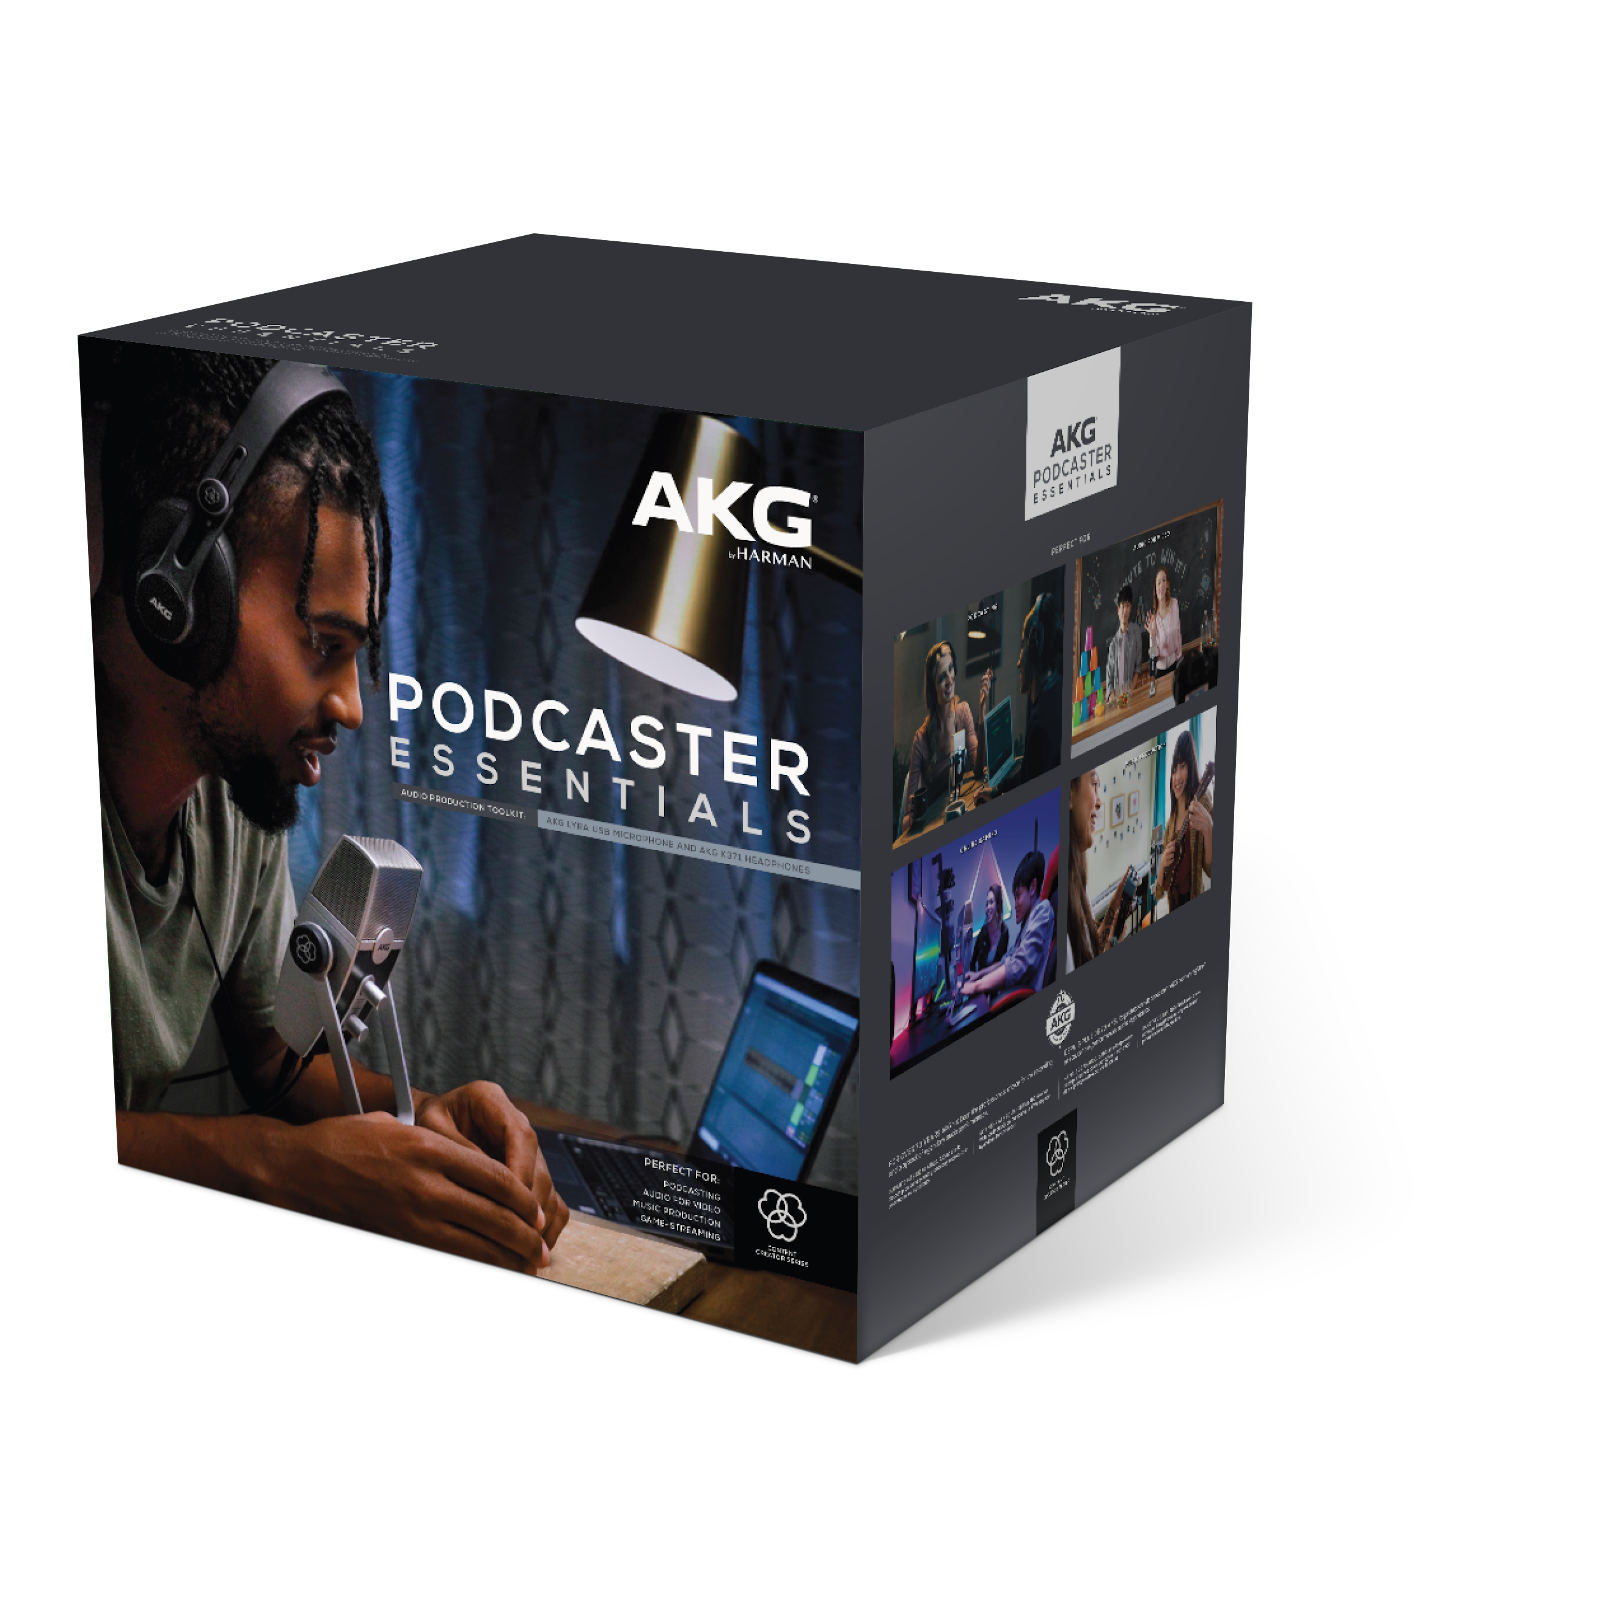 AKG Podcaster Essentials - Black / Gray - Audio Production Toolkit: AKG Lyra USB Microphone and AKG K371 Headphones - Detailshot 1